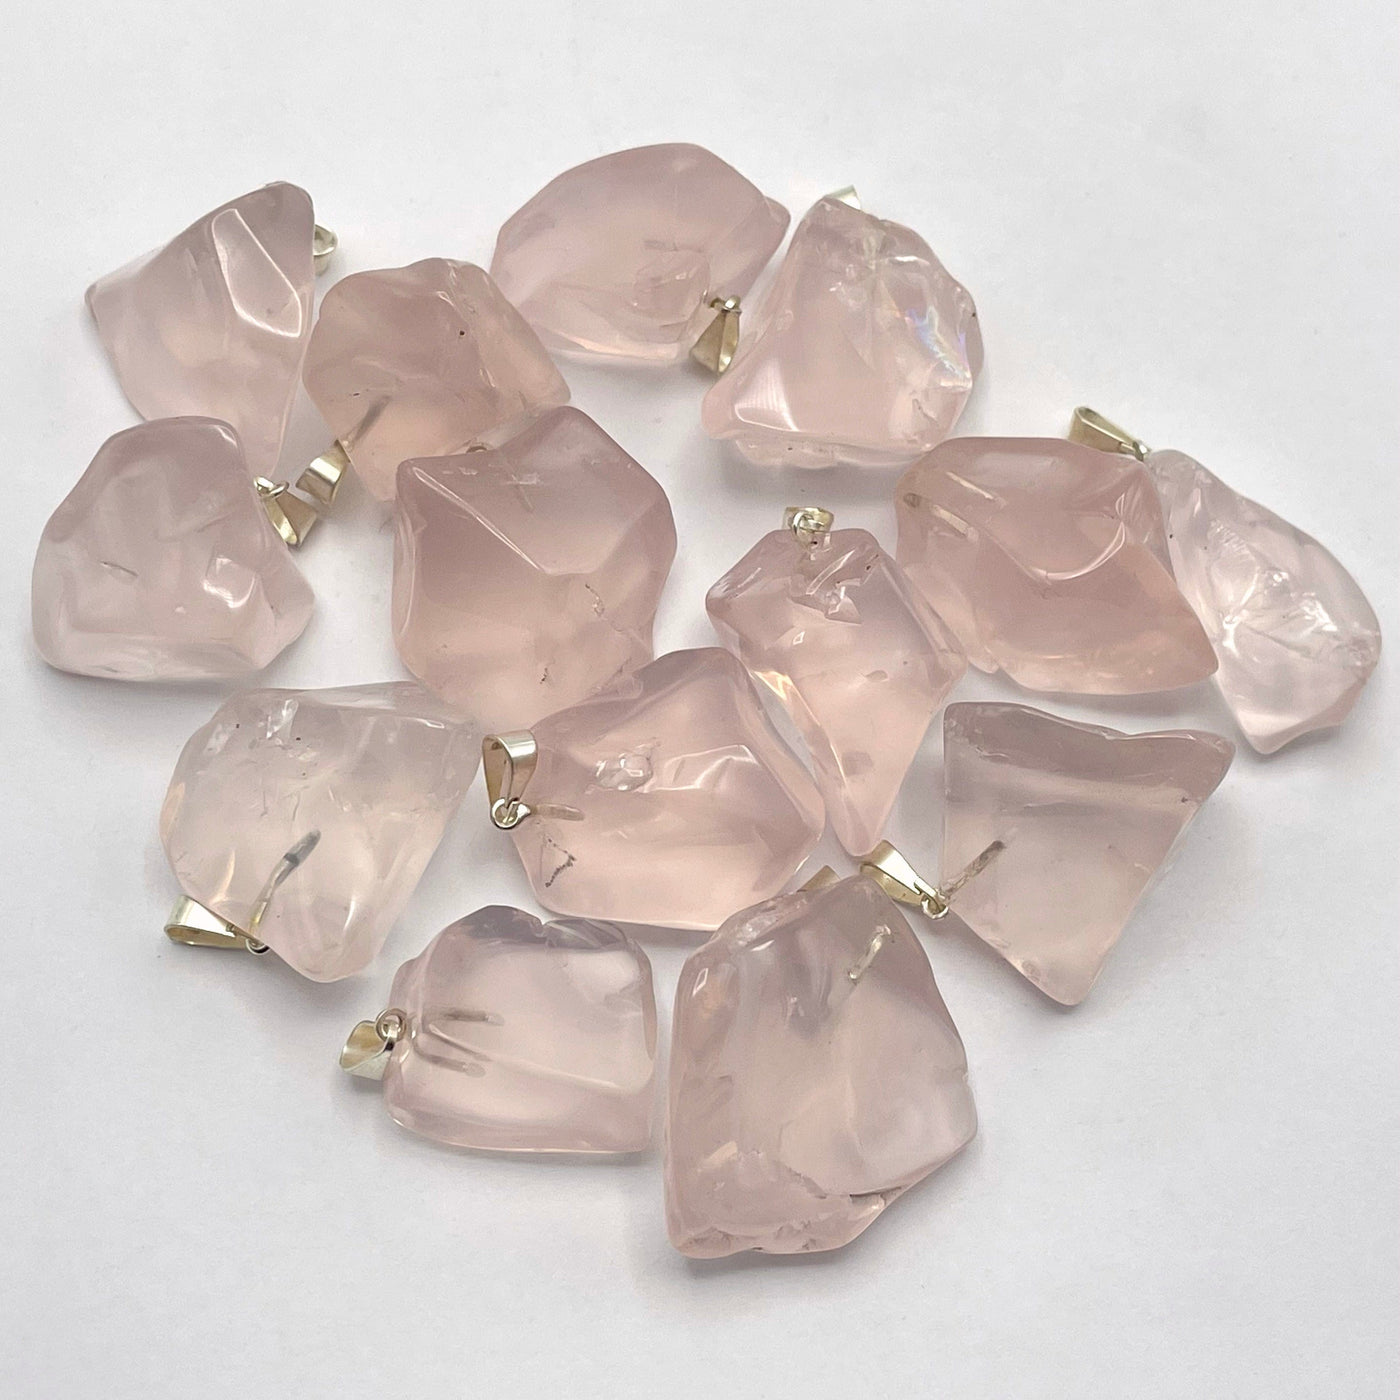 many tumbled rose quartz pendants in a pile on white background